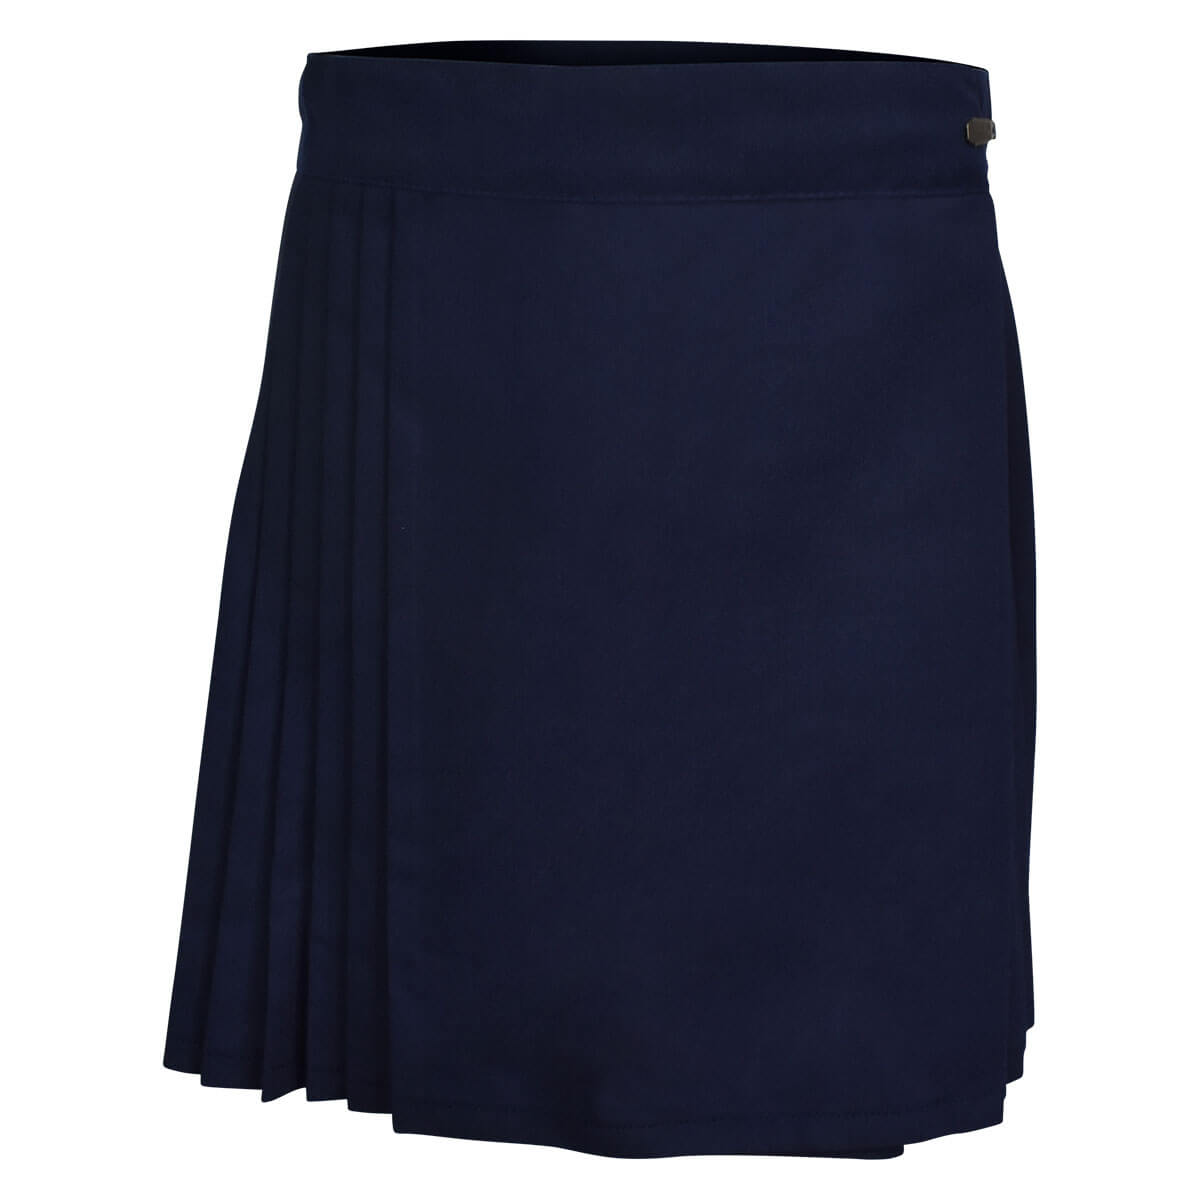 Netball skirt pleated | Manorvale Primary School | Noone